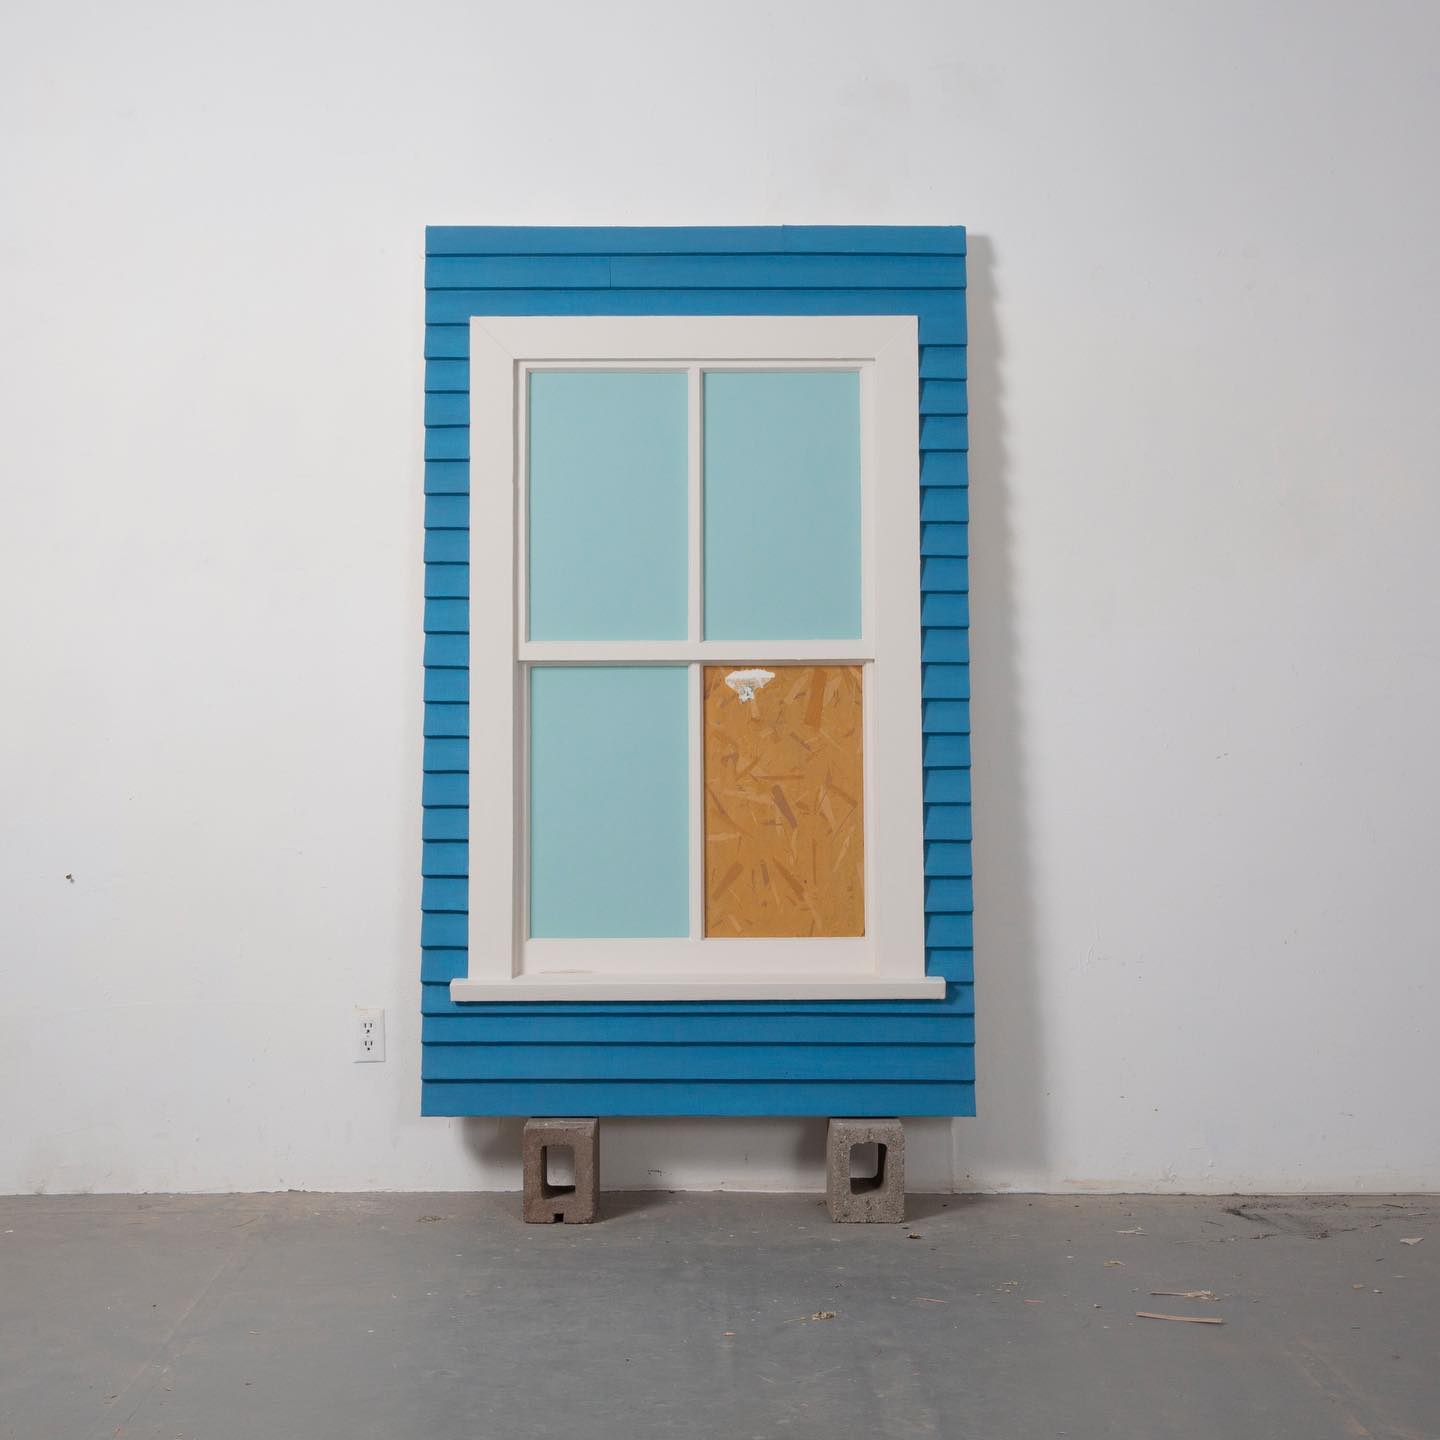 A blue window art Structure